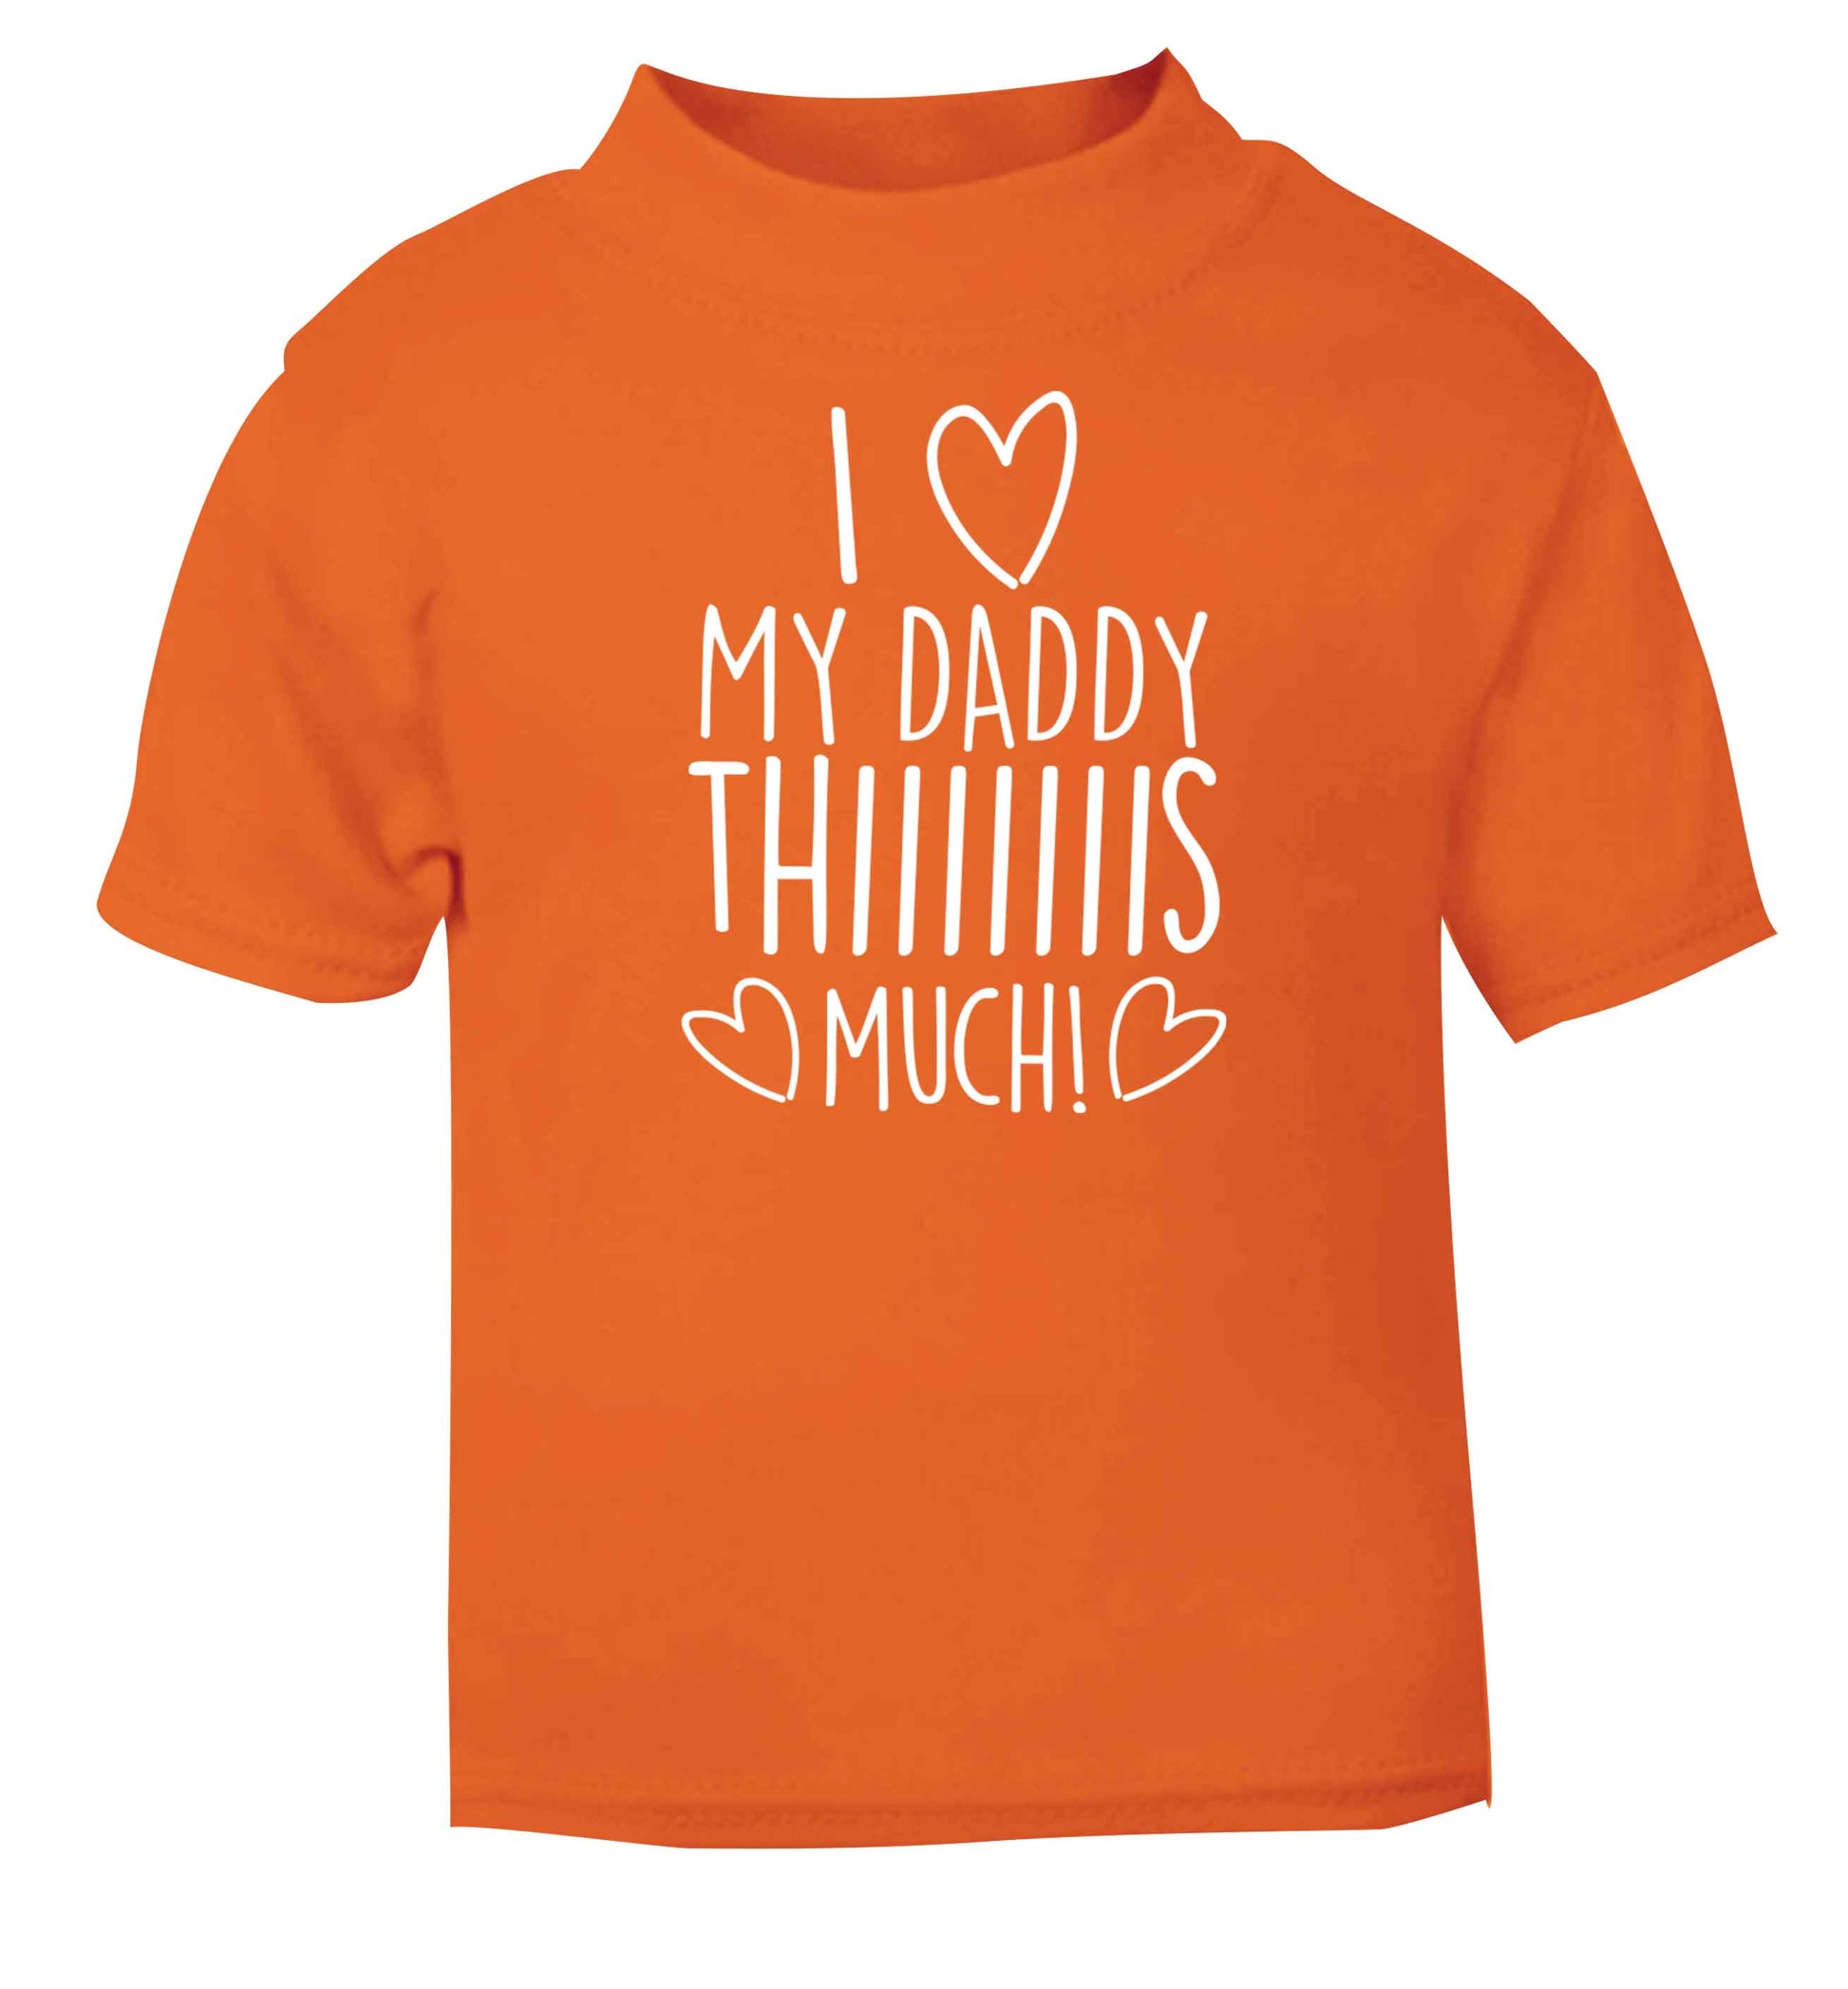 I love my daddy thiiiiis much! orange baby toddler Tshirt 2 Years